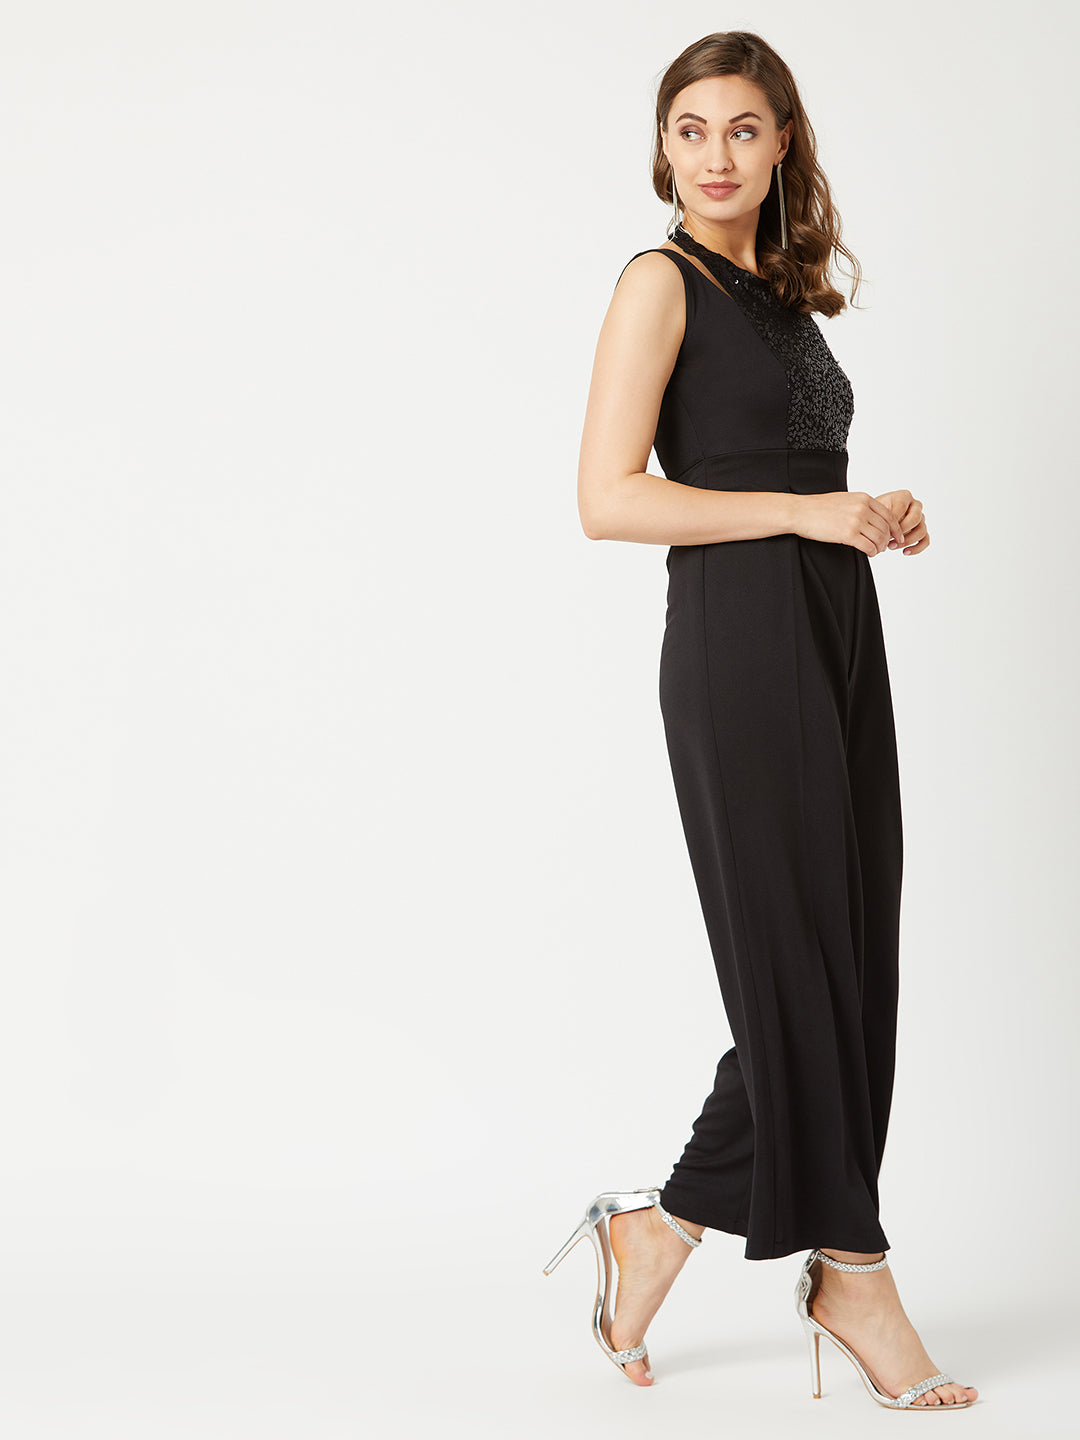 Women's Black Halter Neck Sleeveless Solid Pleated/Wide Leg Sequin Paneled Regular Length Jumpsuit